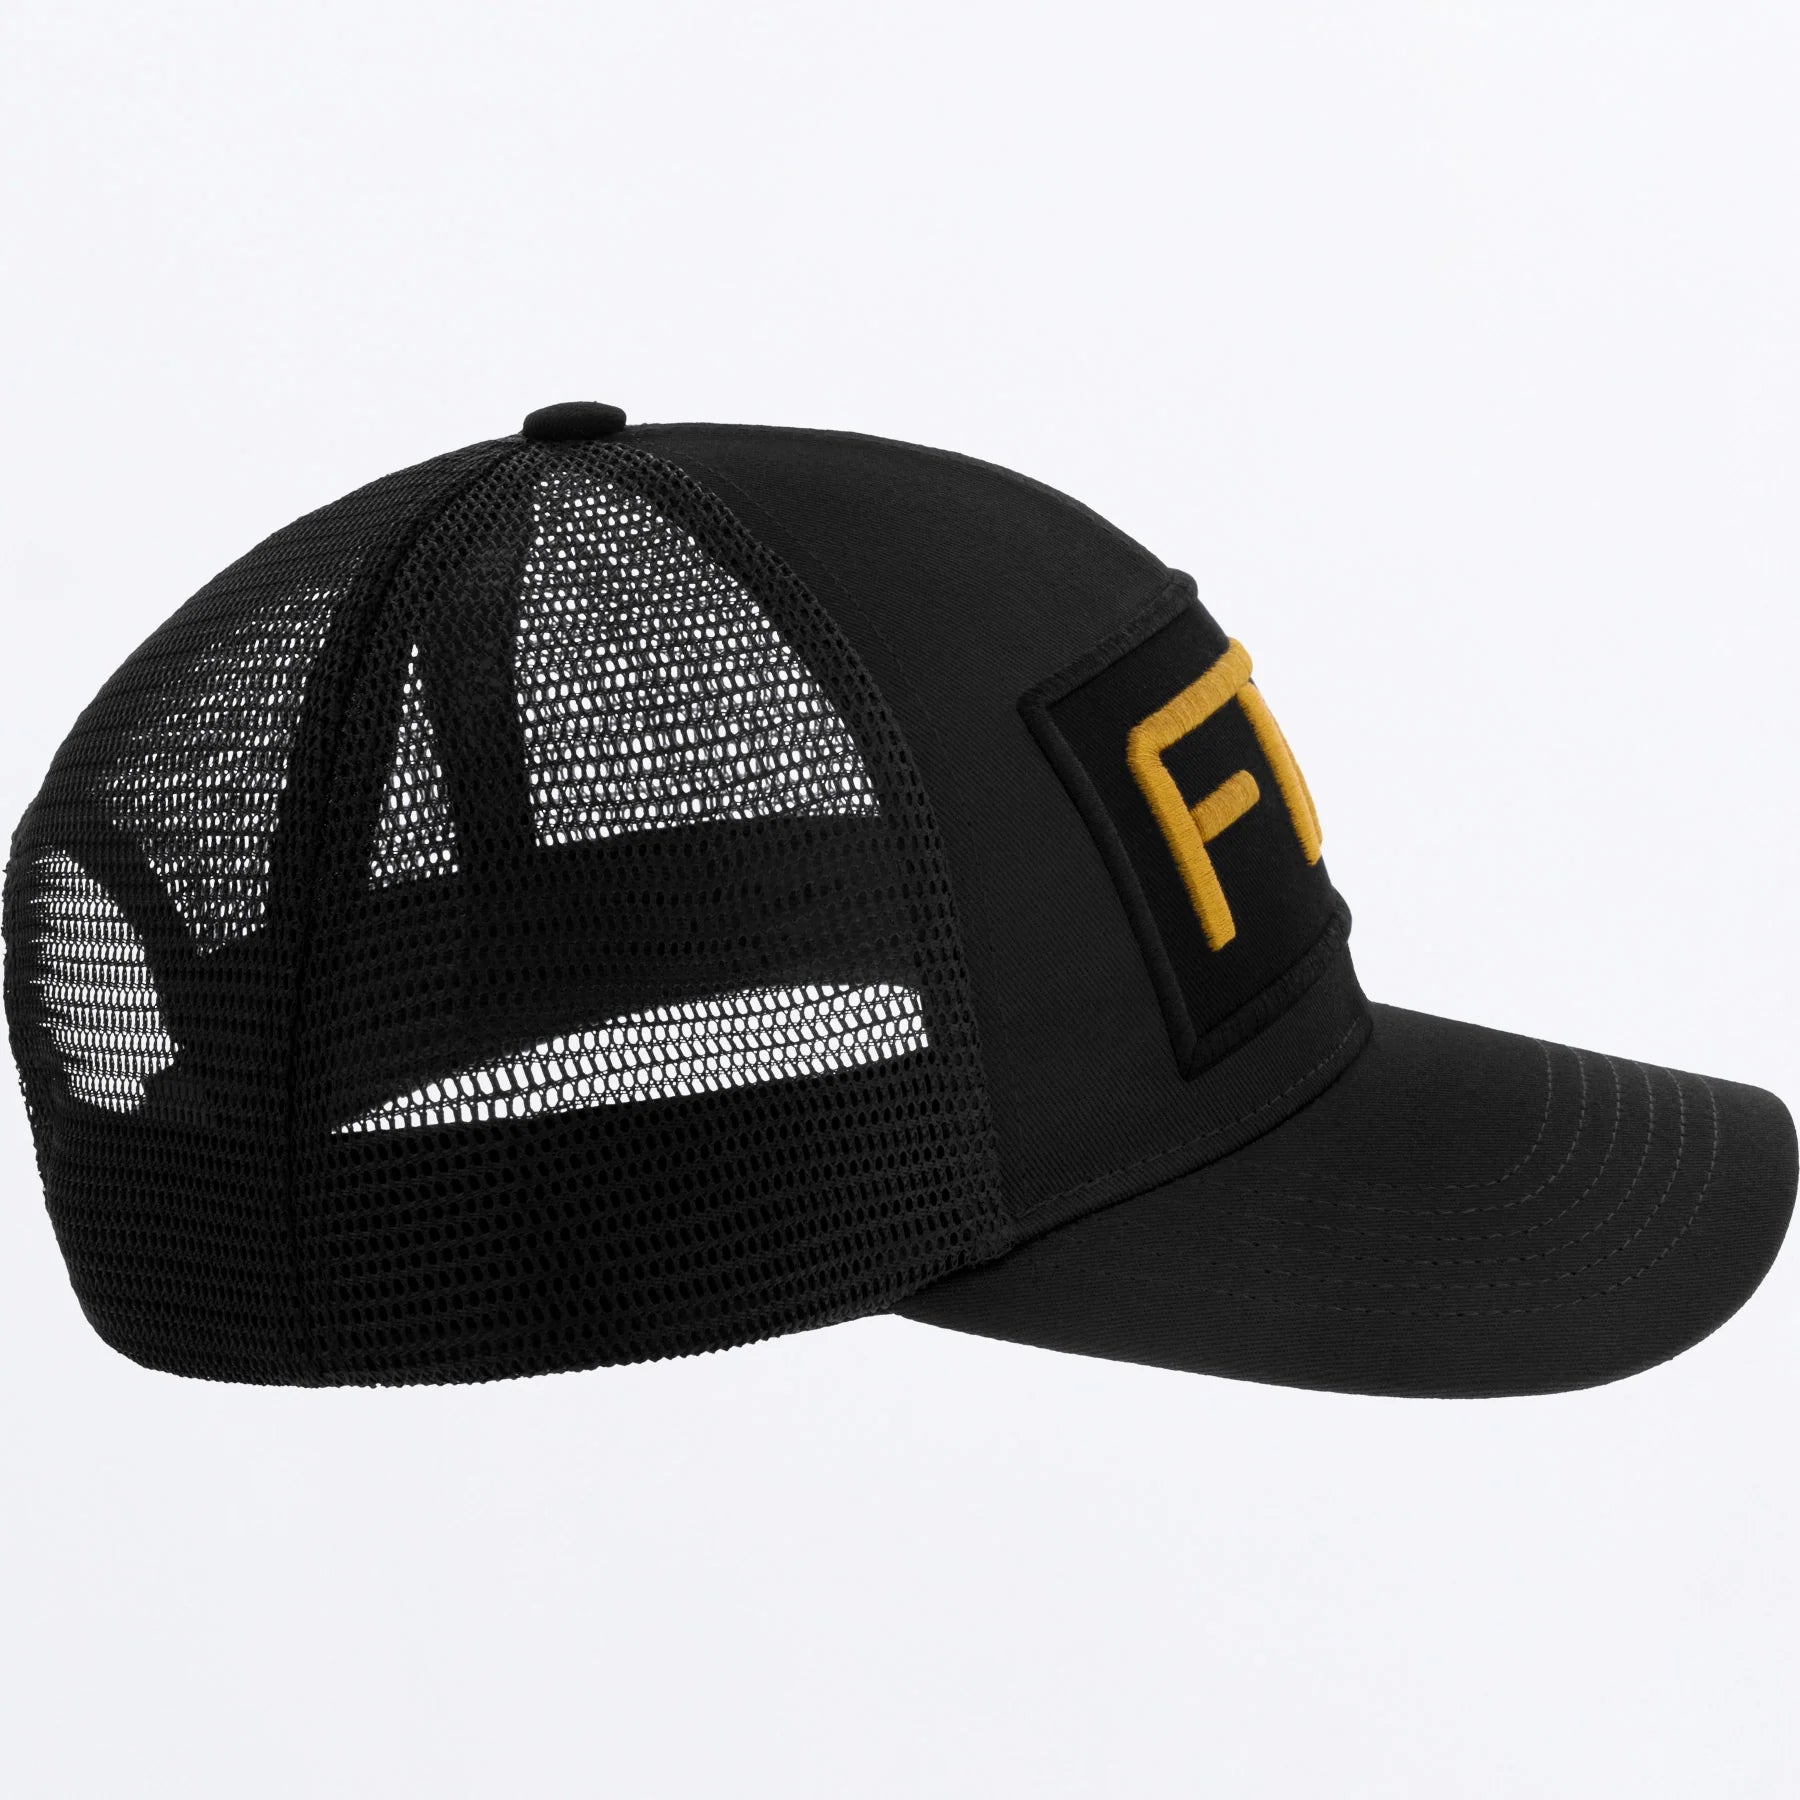 FTA Stylz Hat Black/Gold